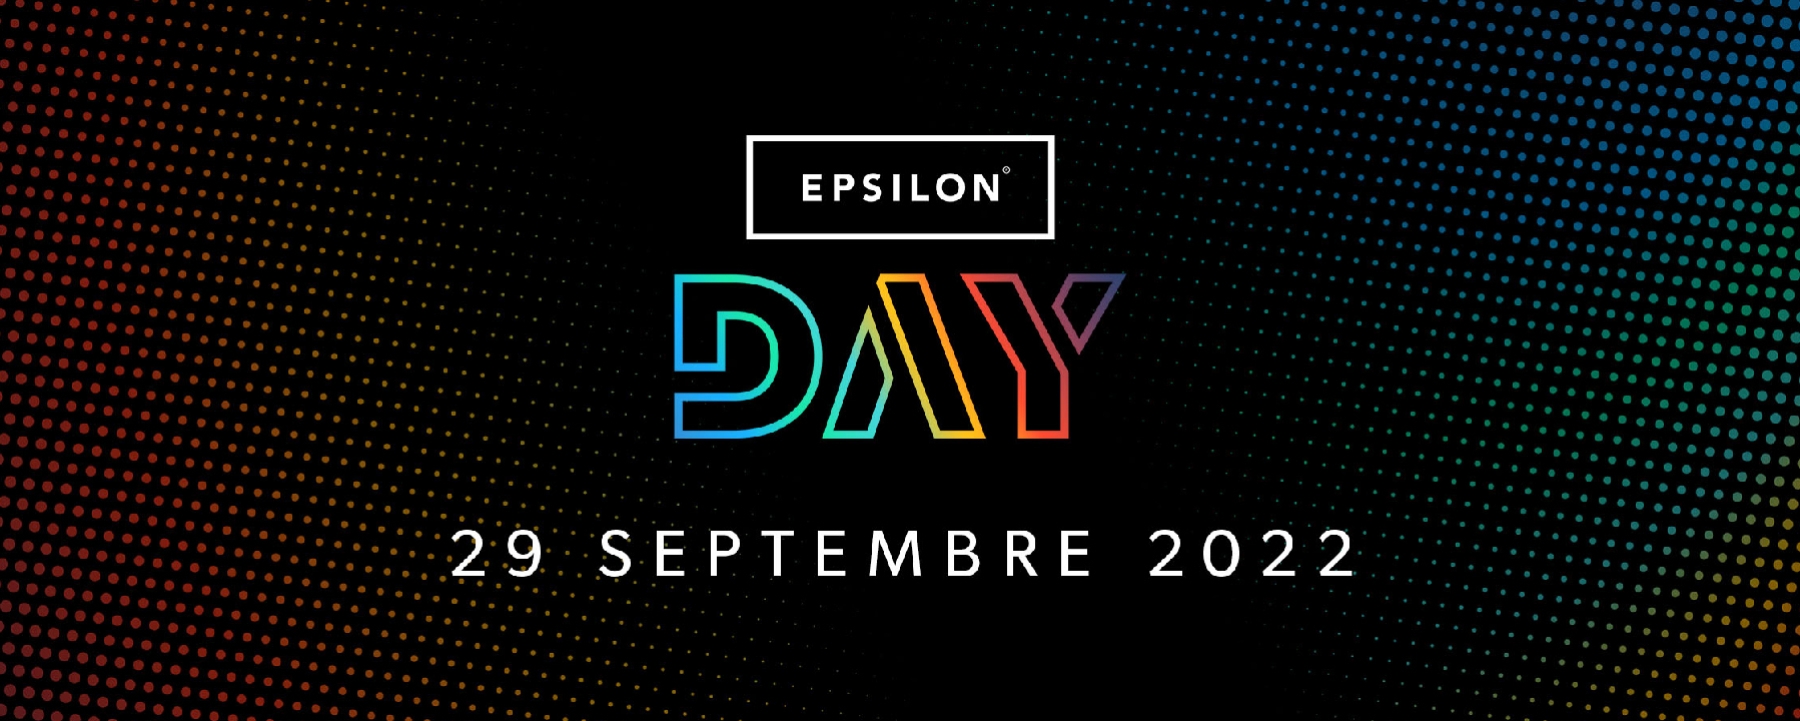 Epsilon Day